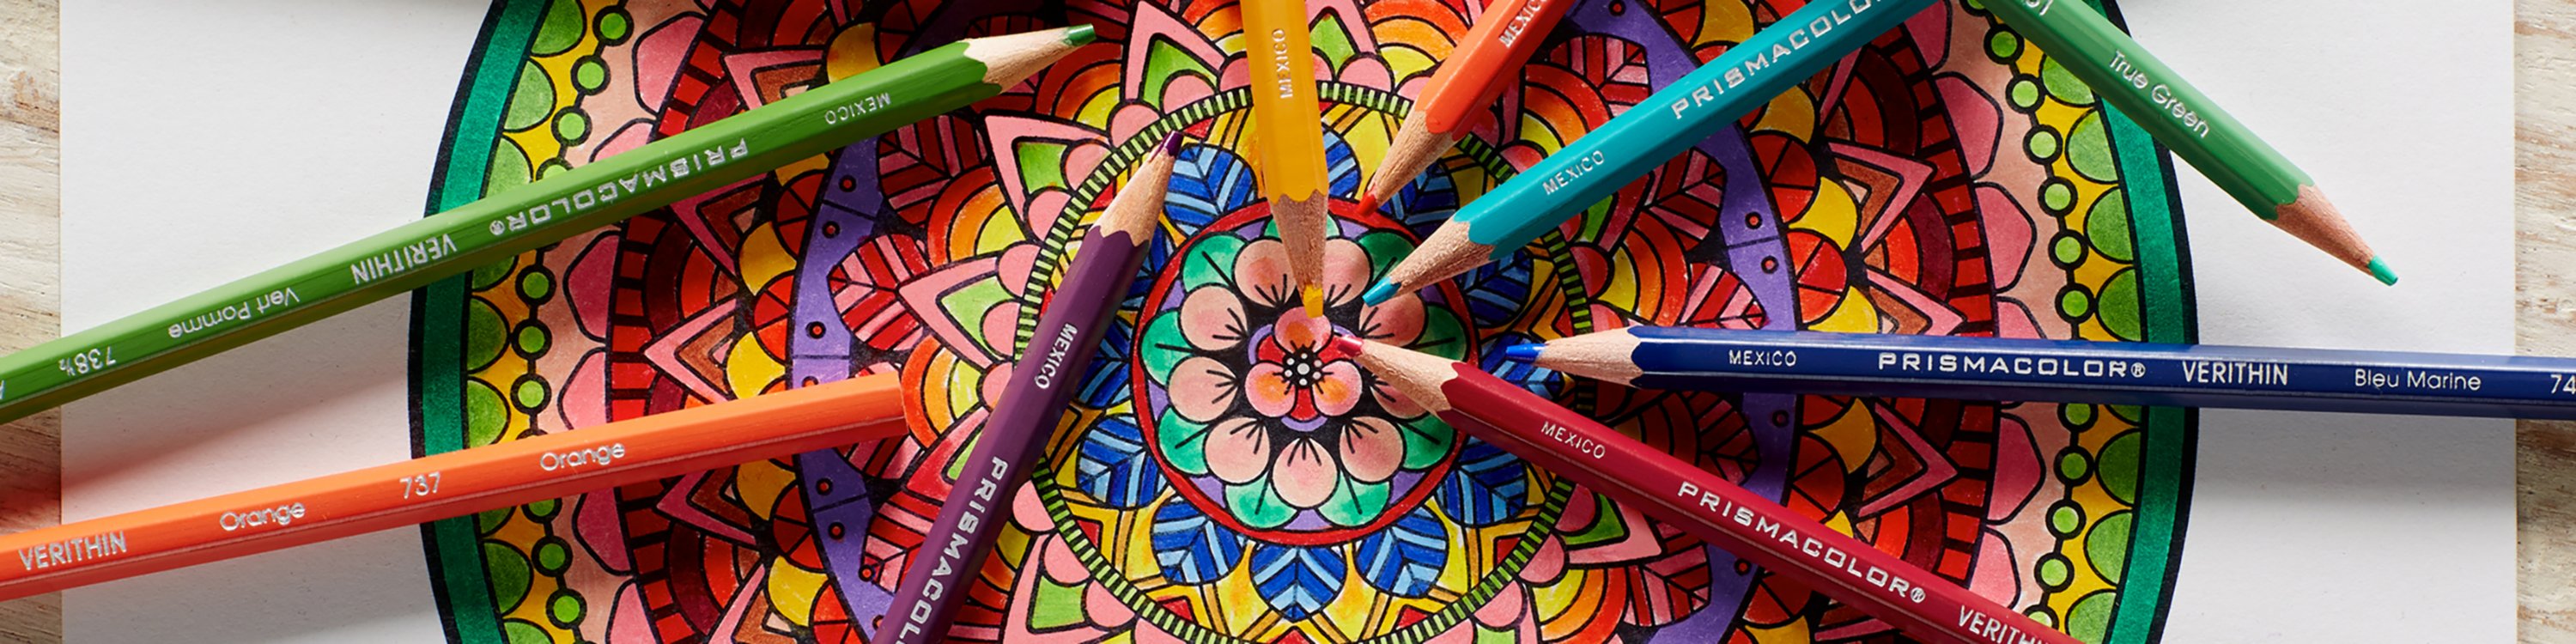 Buy Single Prismacolor Colored Pencils & Sets Online 